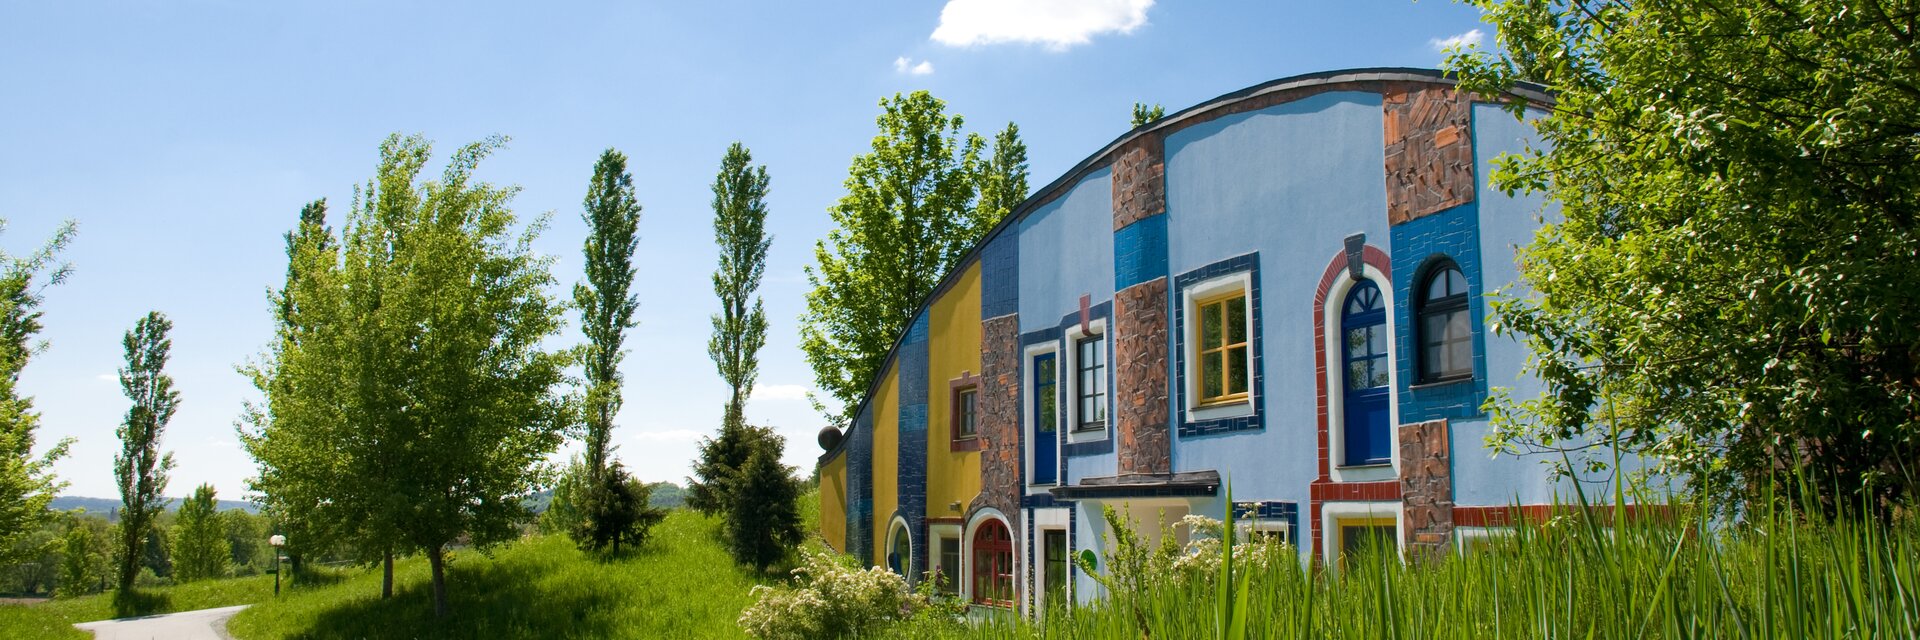 Augenschlitzhäuser | © Thermen Rogner Bad Blumau, Hundertwasser Architekturprojekt | © Thermen Rogner Bad Blumau, Hundertwasser Architekturprojekt